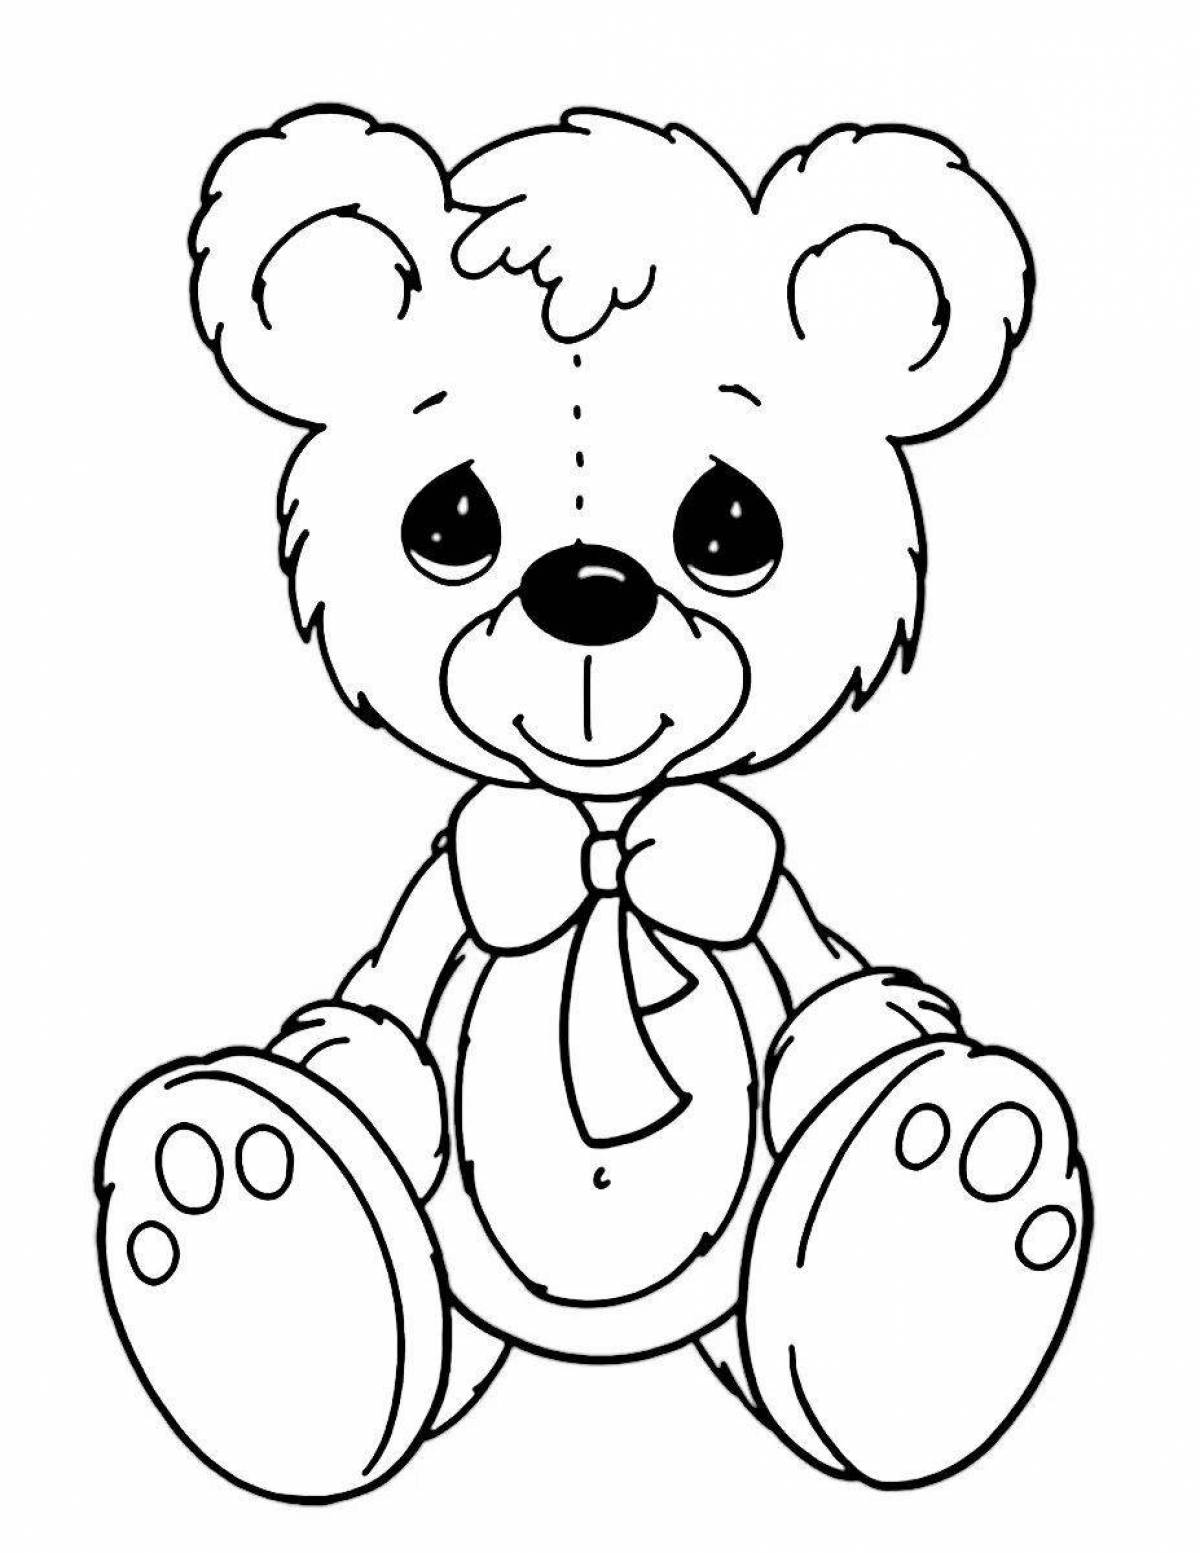 Coloring page wonderful teddy bear